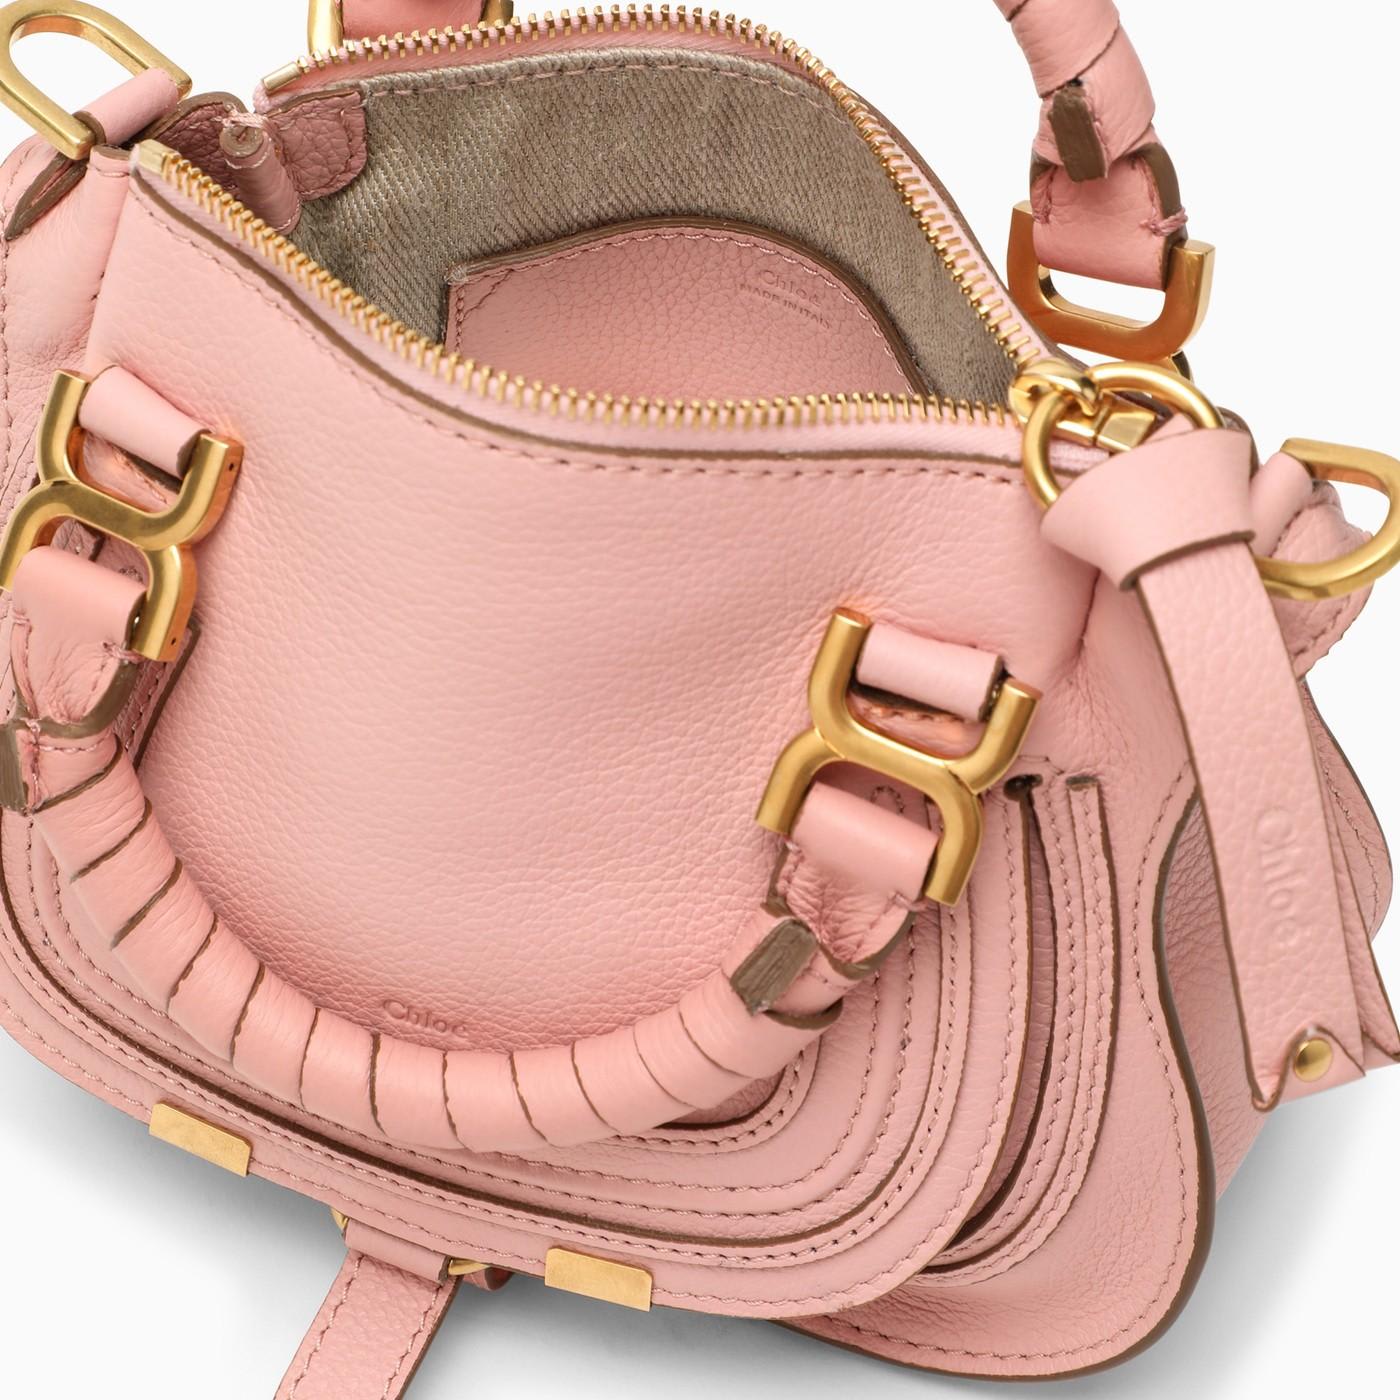 Chloé Mini Marcie Handbag, Chloé US